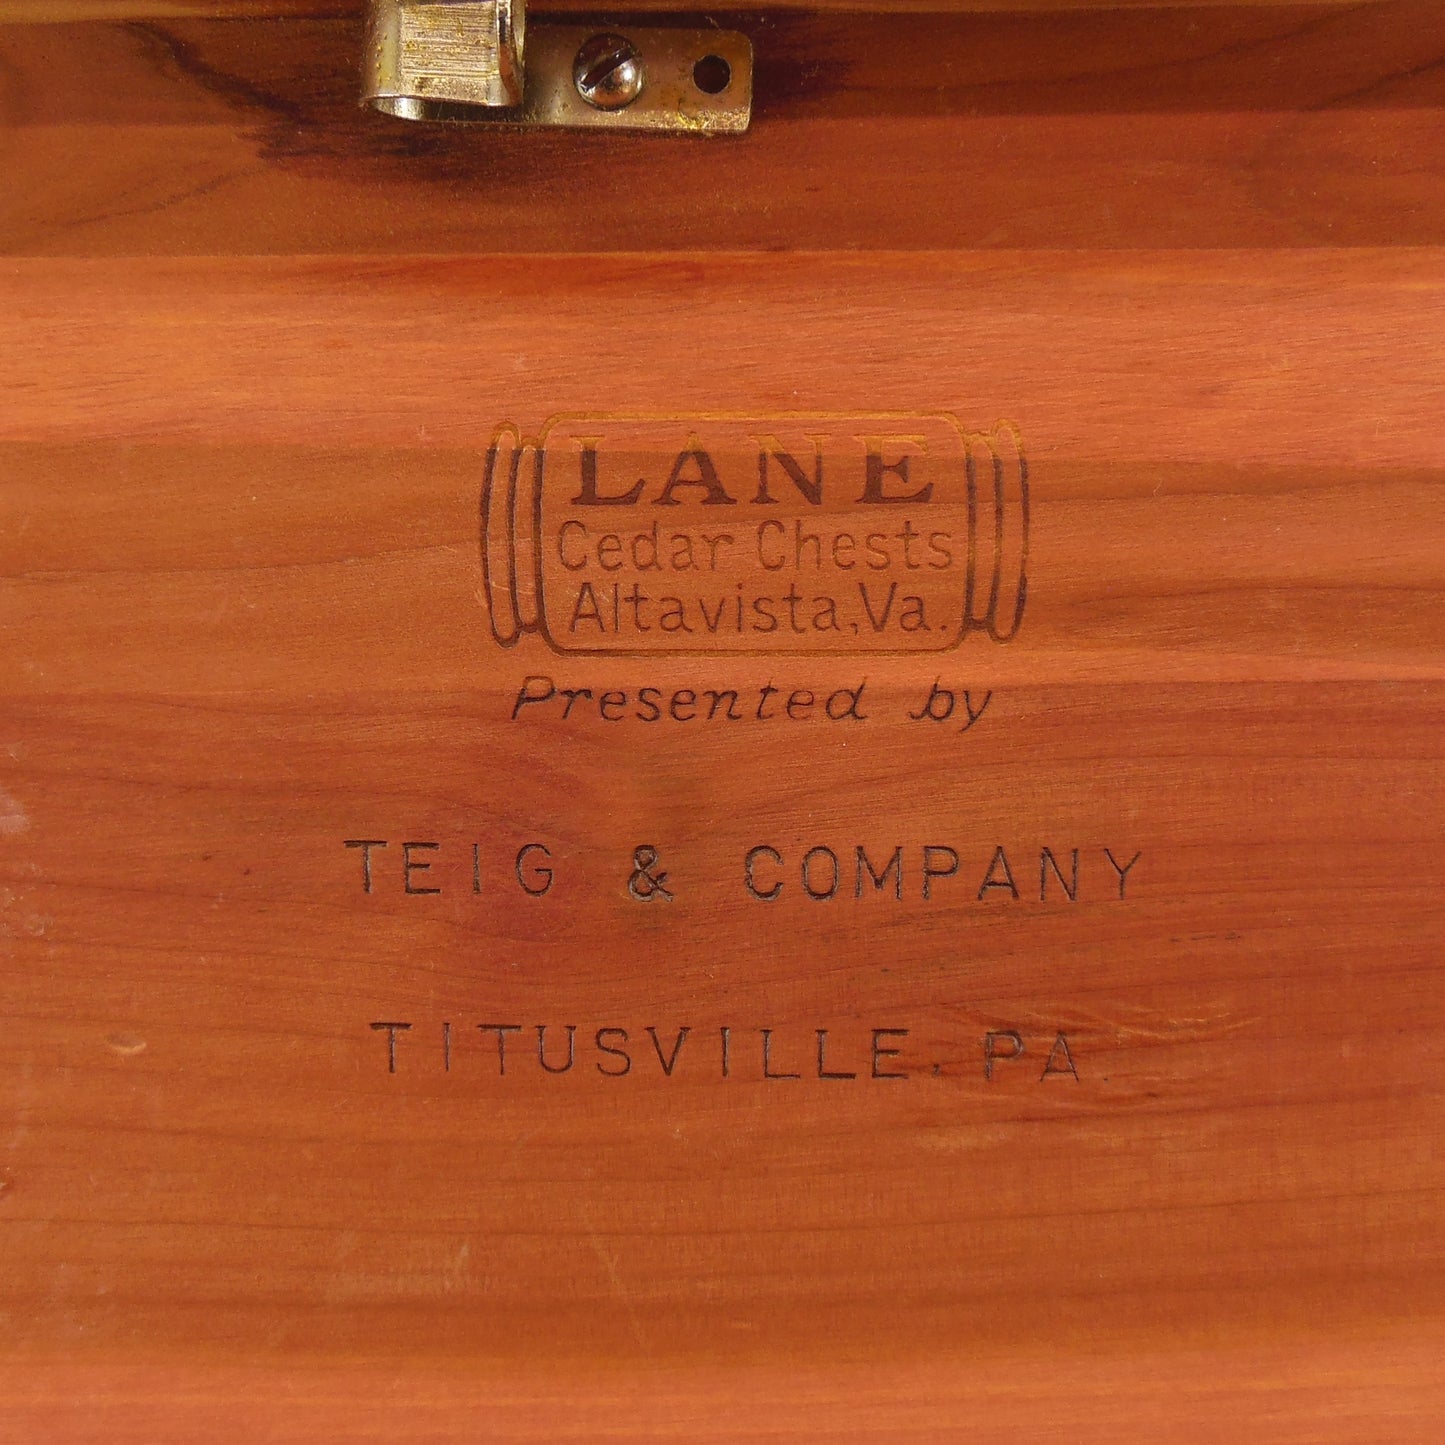 Lane Miniature Cedar Chest Box - Teig & Company Titusville PA Presentation